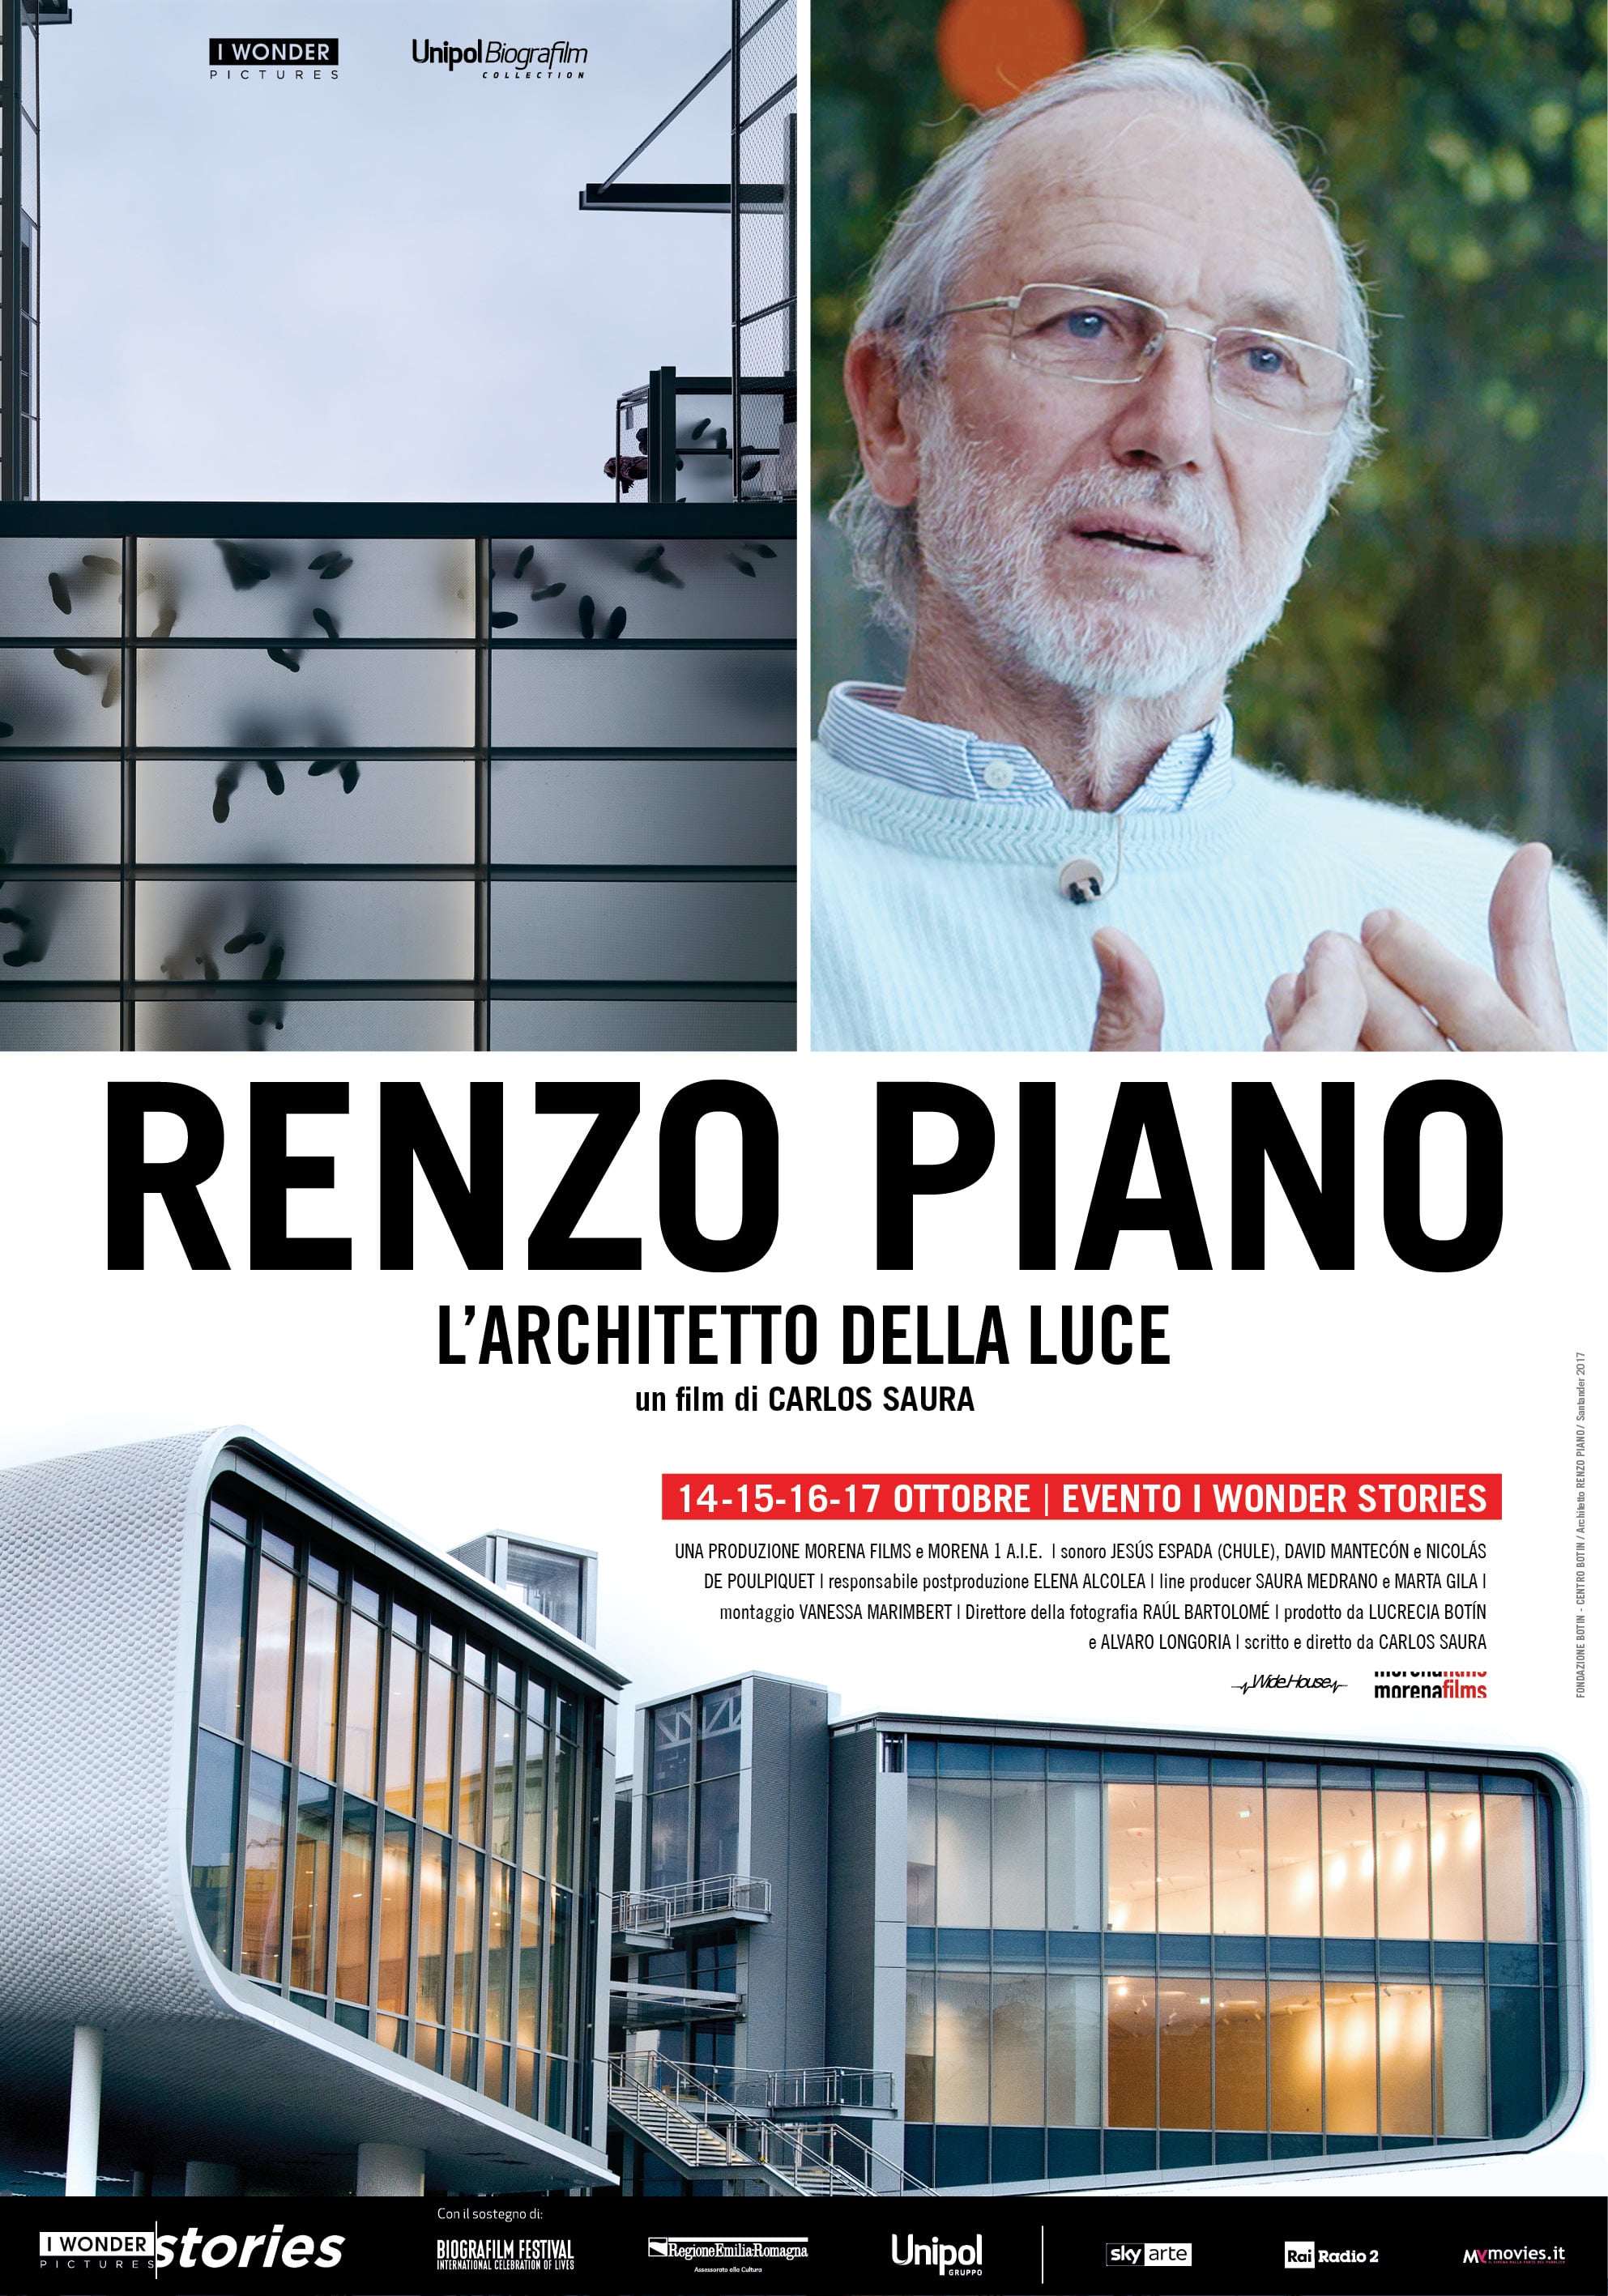 Renzo Piano, an Architect for Santander